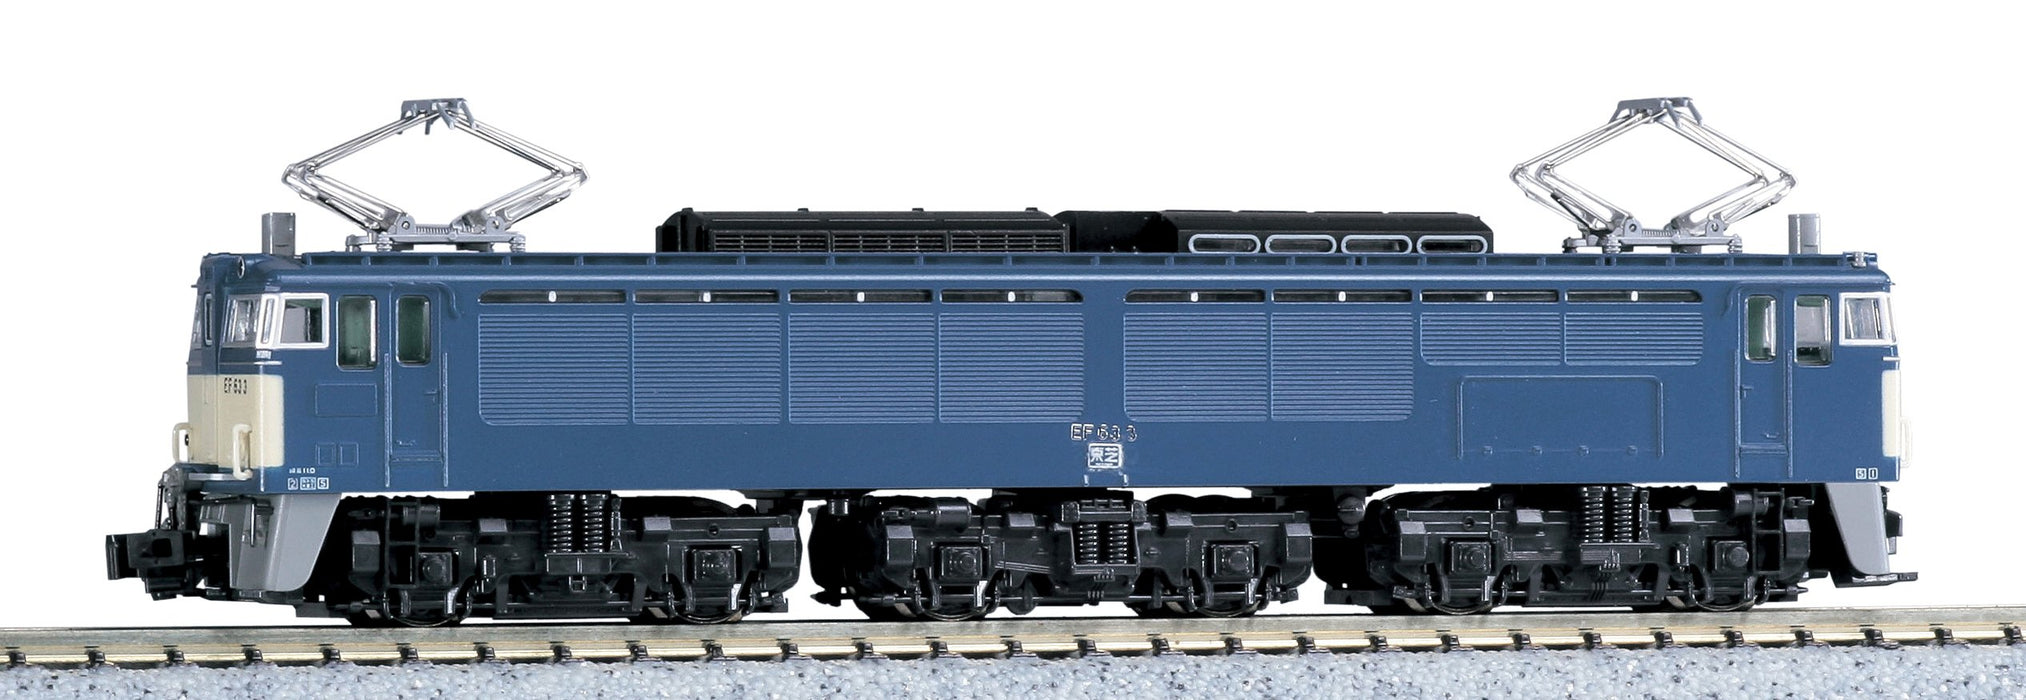 Kato N Gauge Ef63 Primary Type - Premium Model Train Set